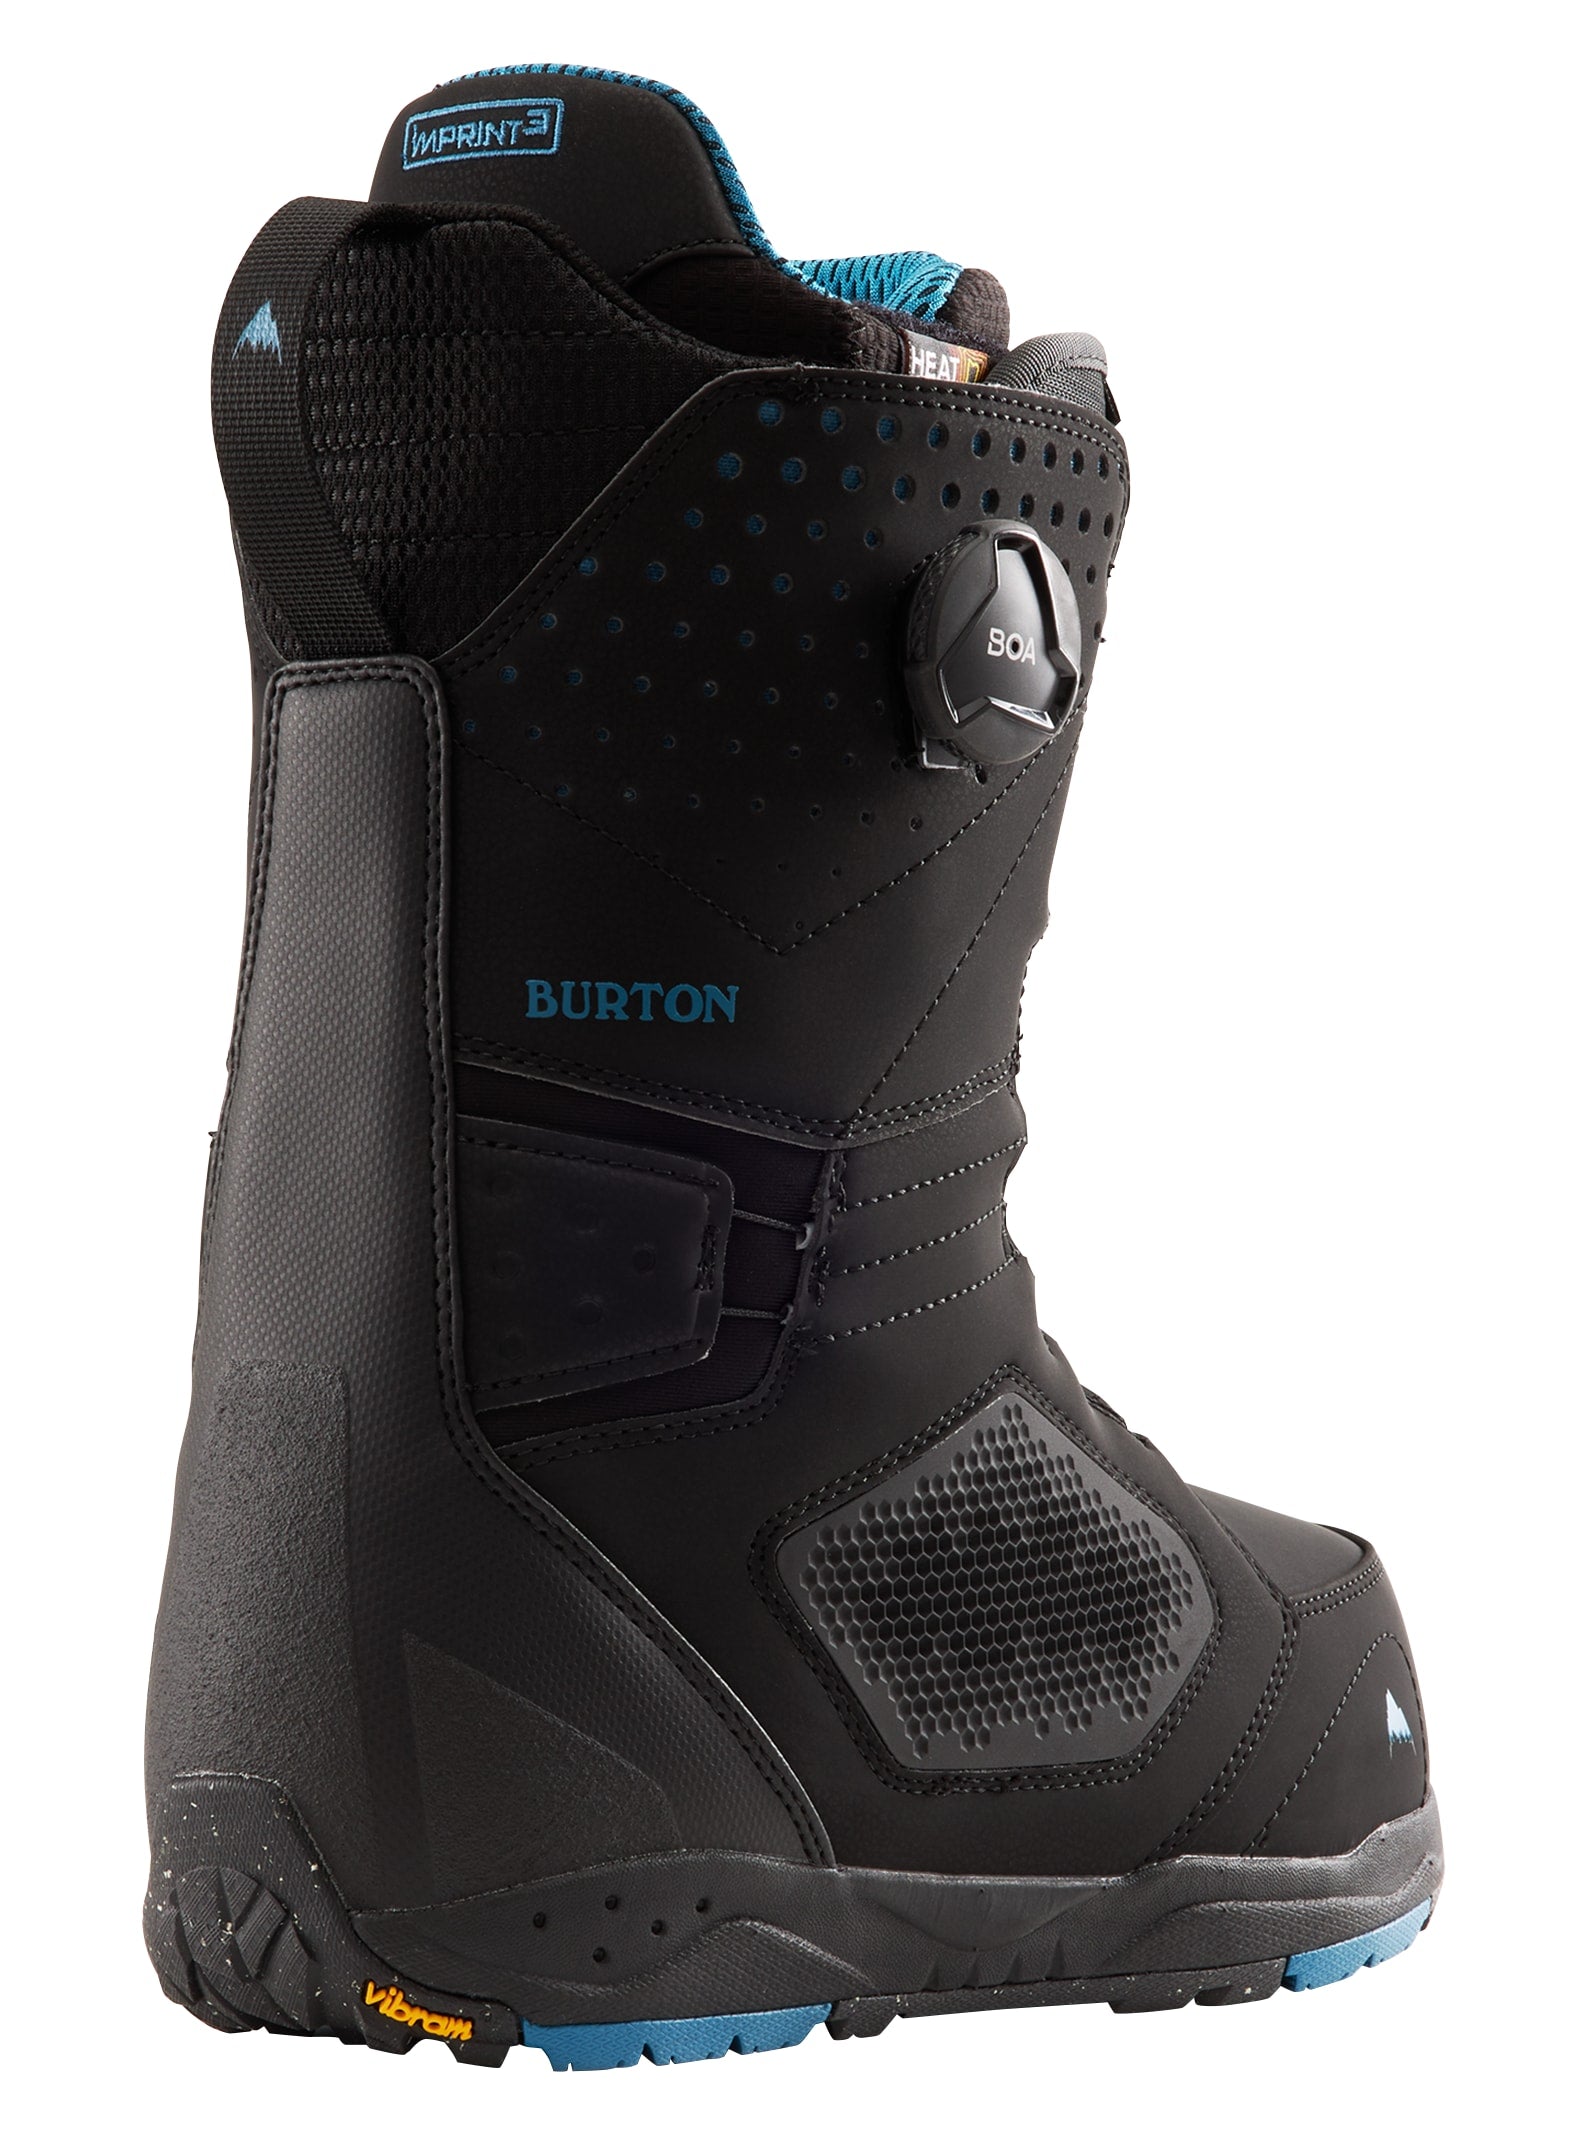 Men's Photon BOA® Snowboard Boots, Black